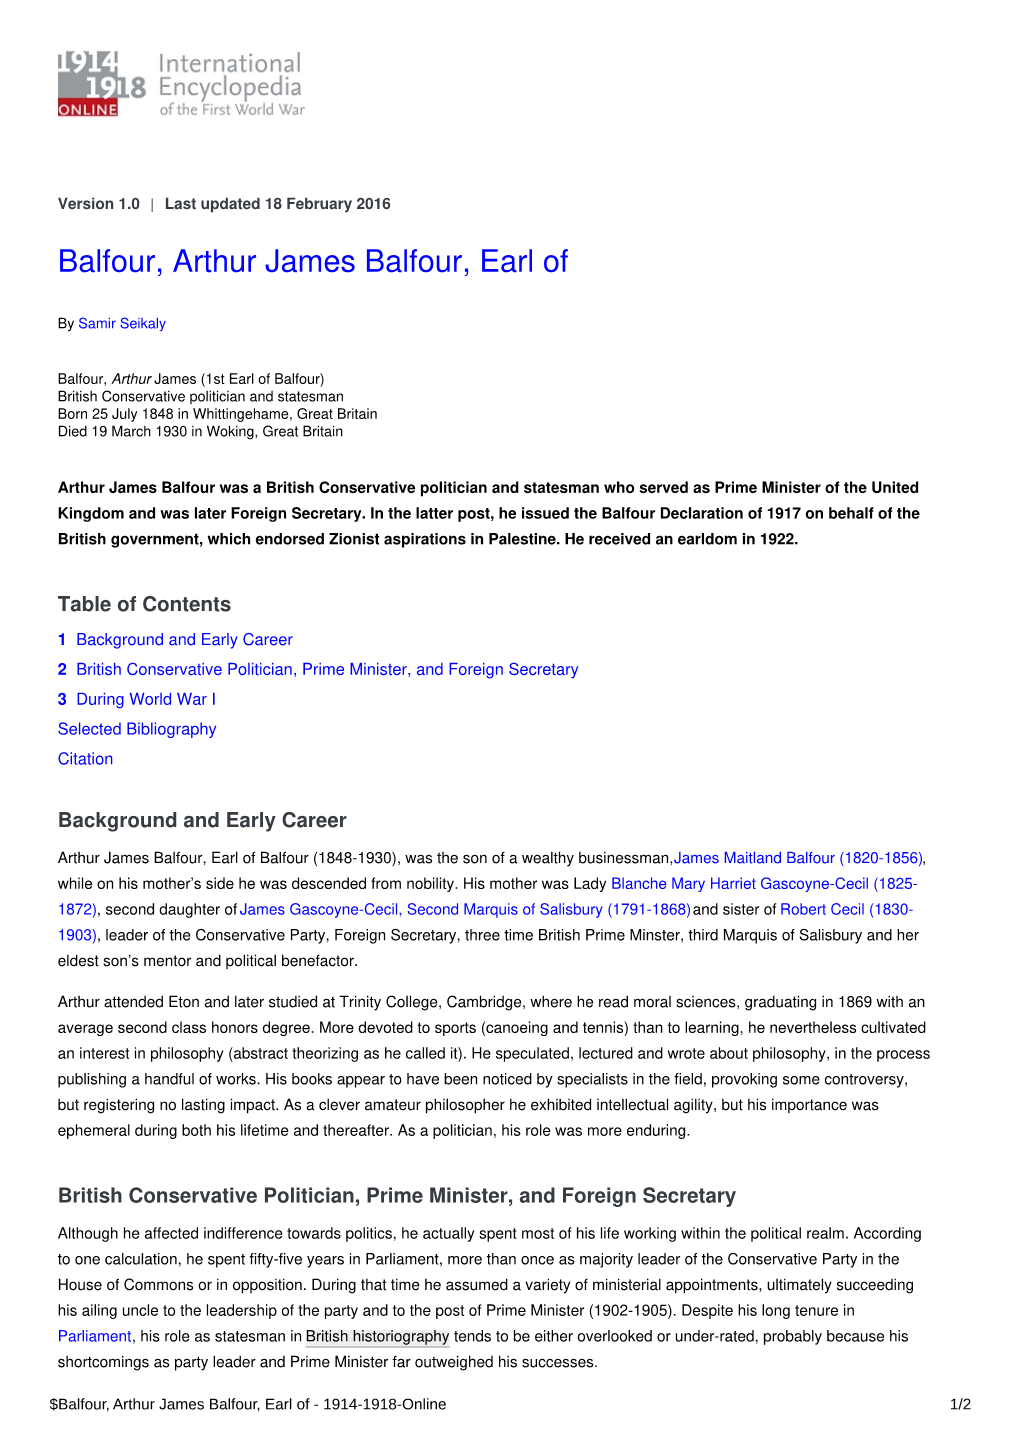 Balfour, Arthur James Balfour, Earl of | International Encyclopedia of The